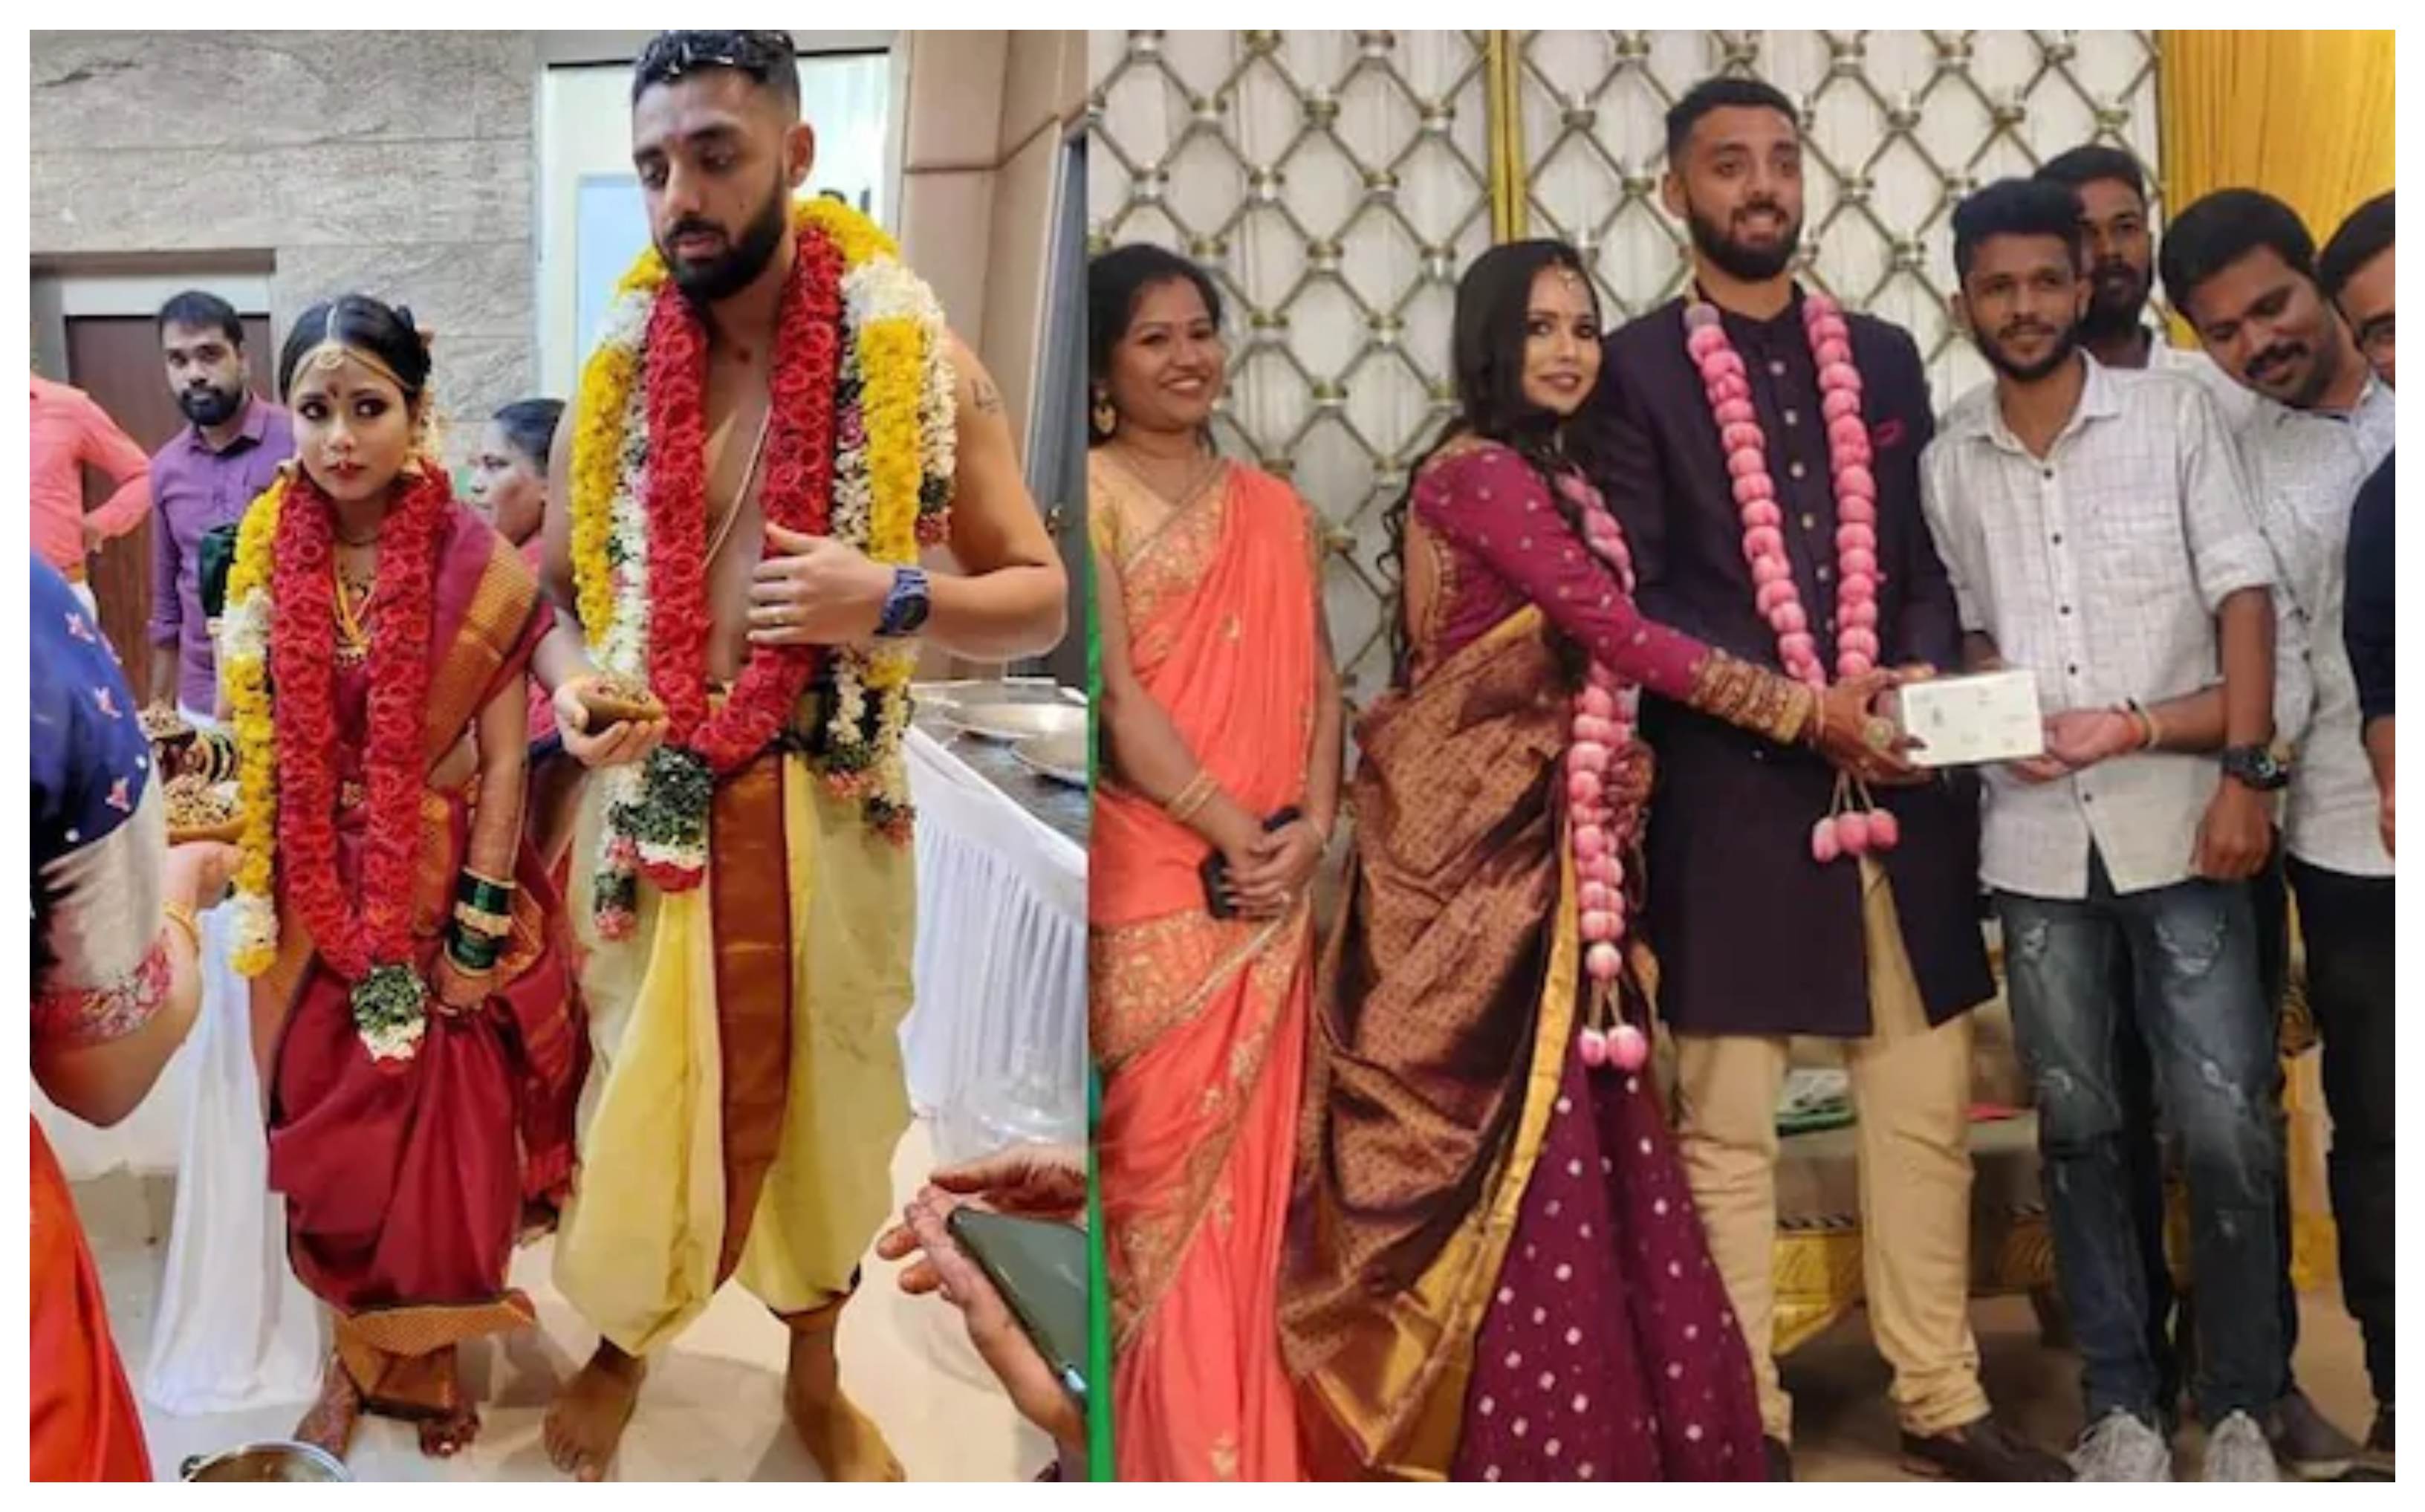 KKR shared pictures of Varun Chakaravarthy's wedding | Twitter